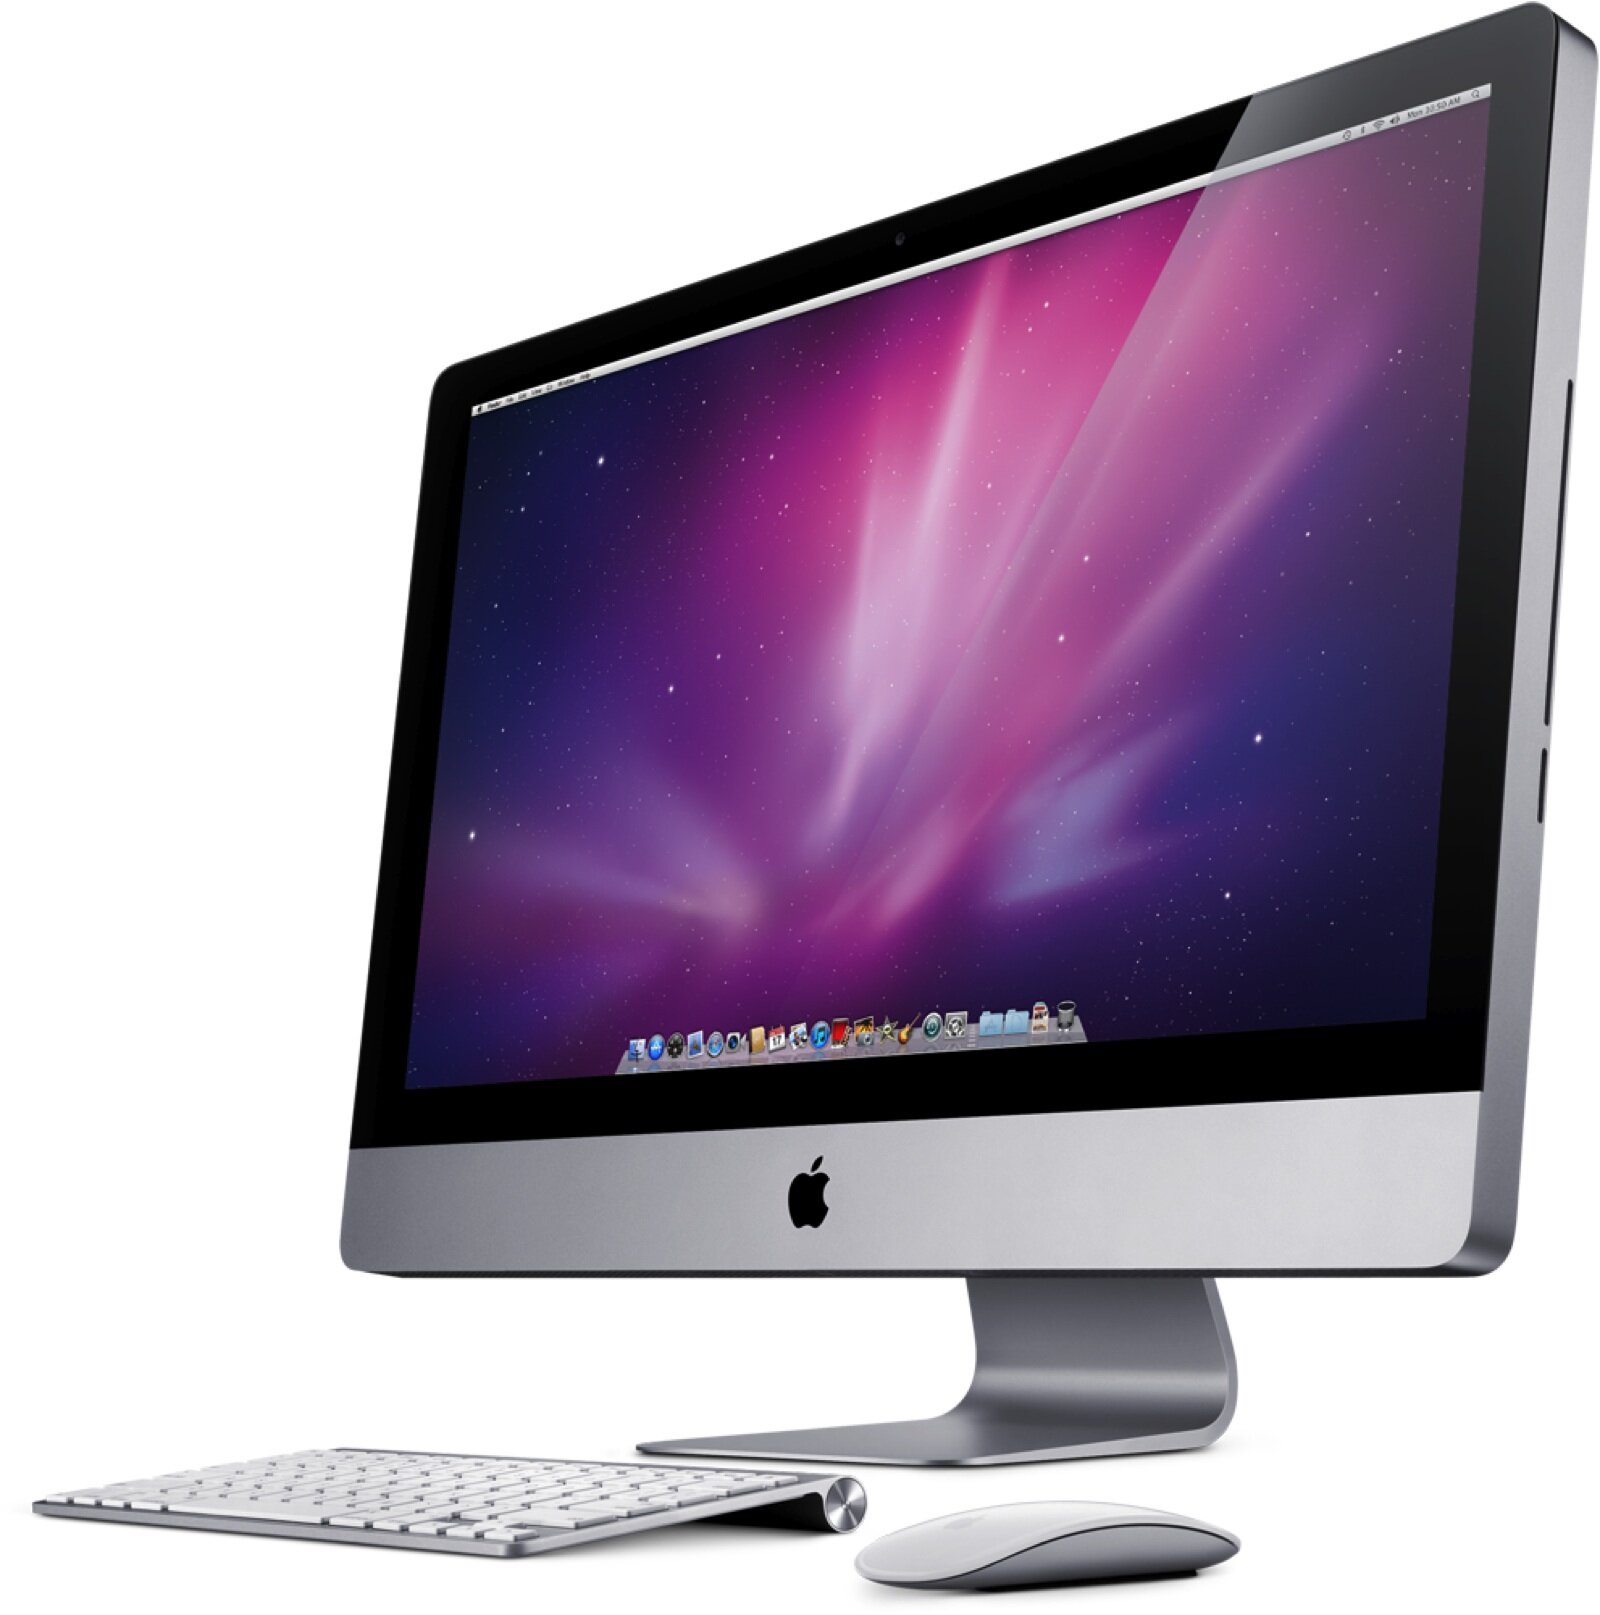 Компьютер Mac Apple: характеристики и отзывы